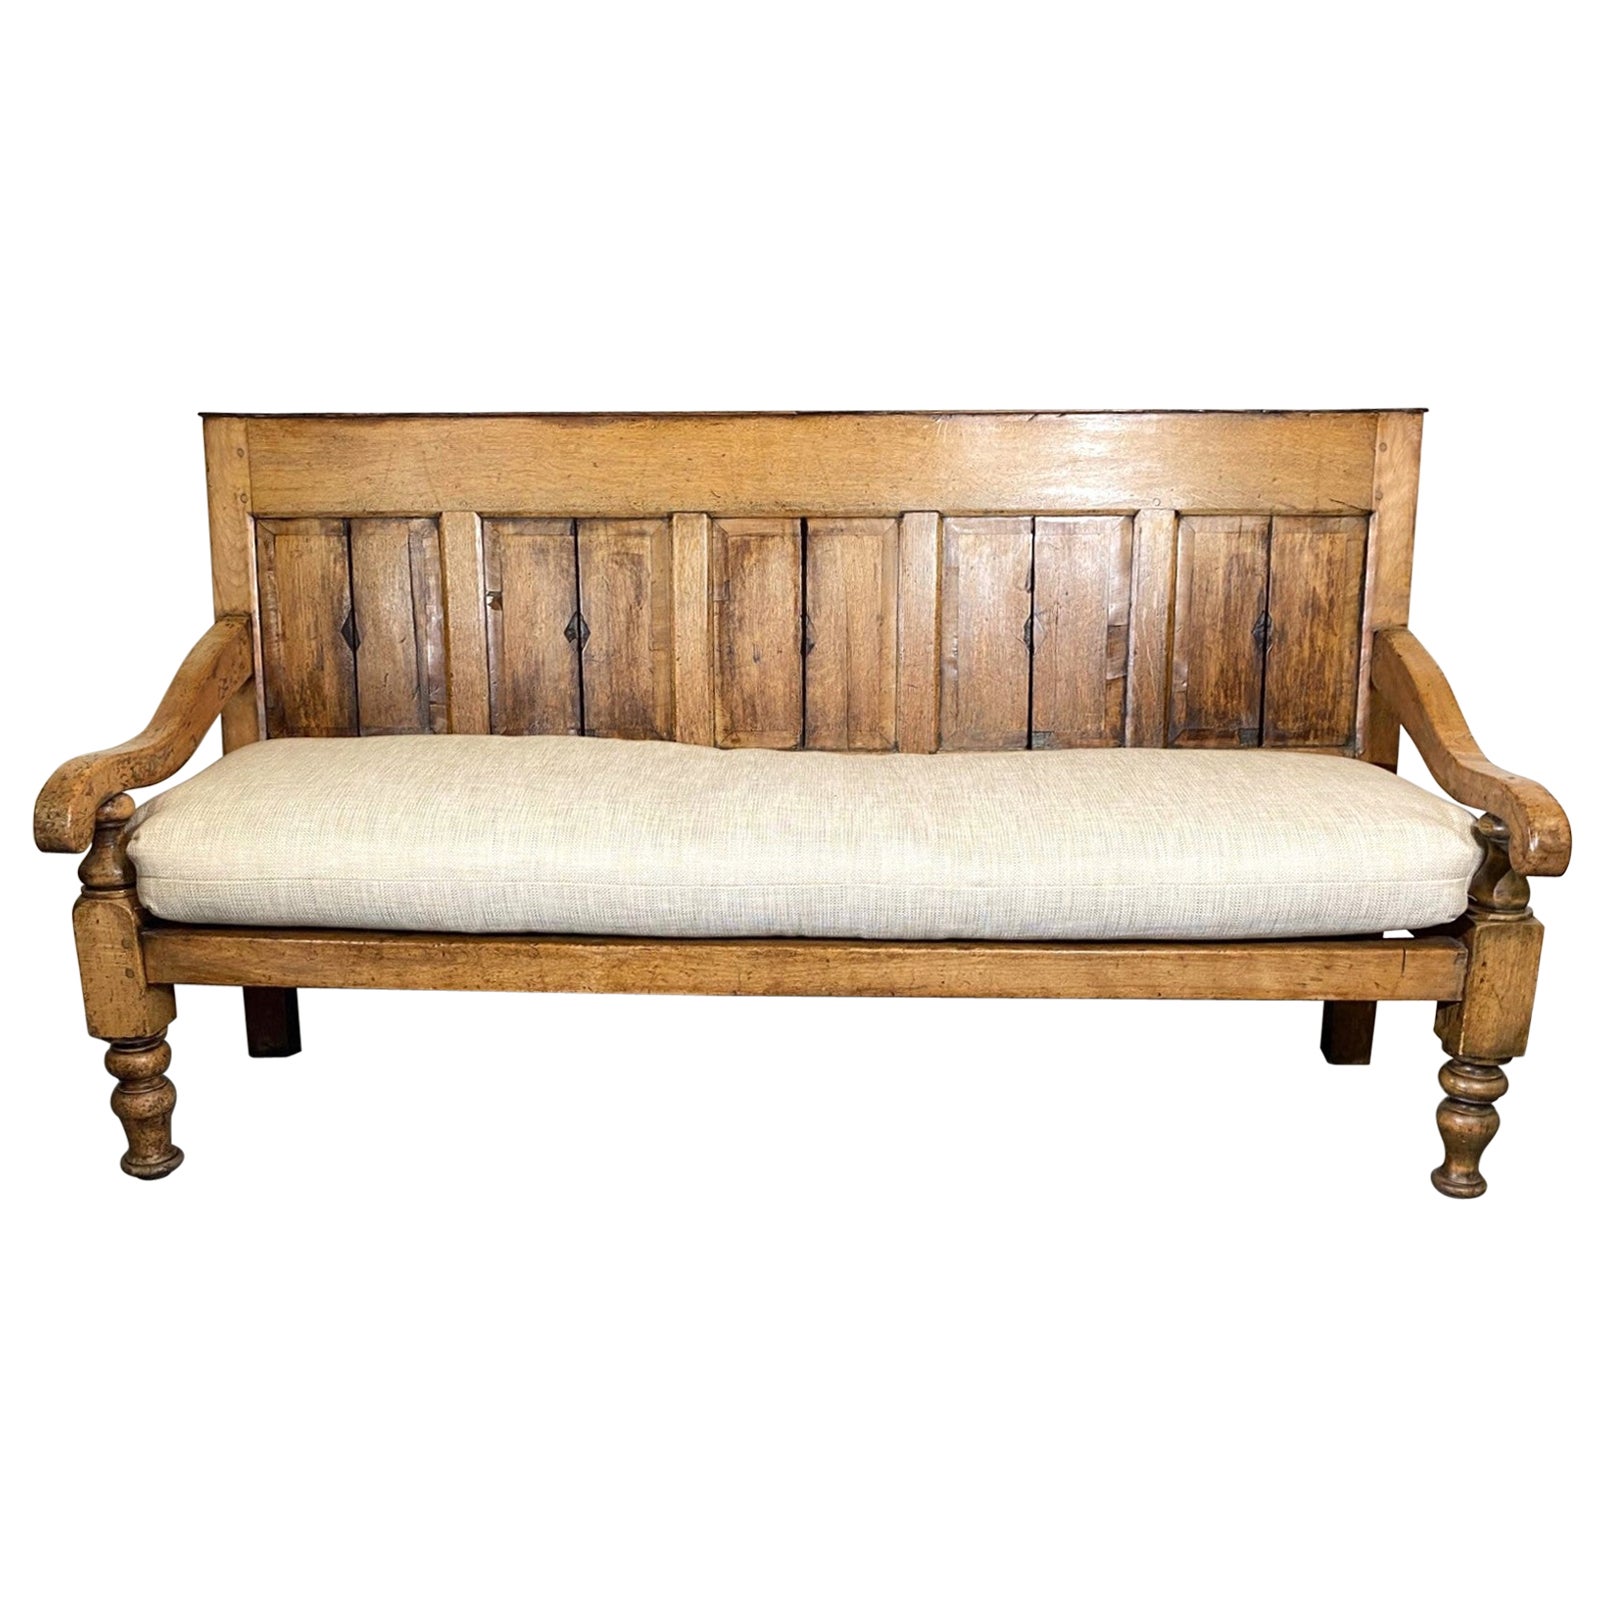 1840 English Bench